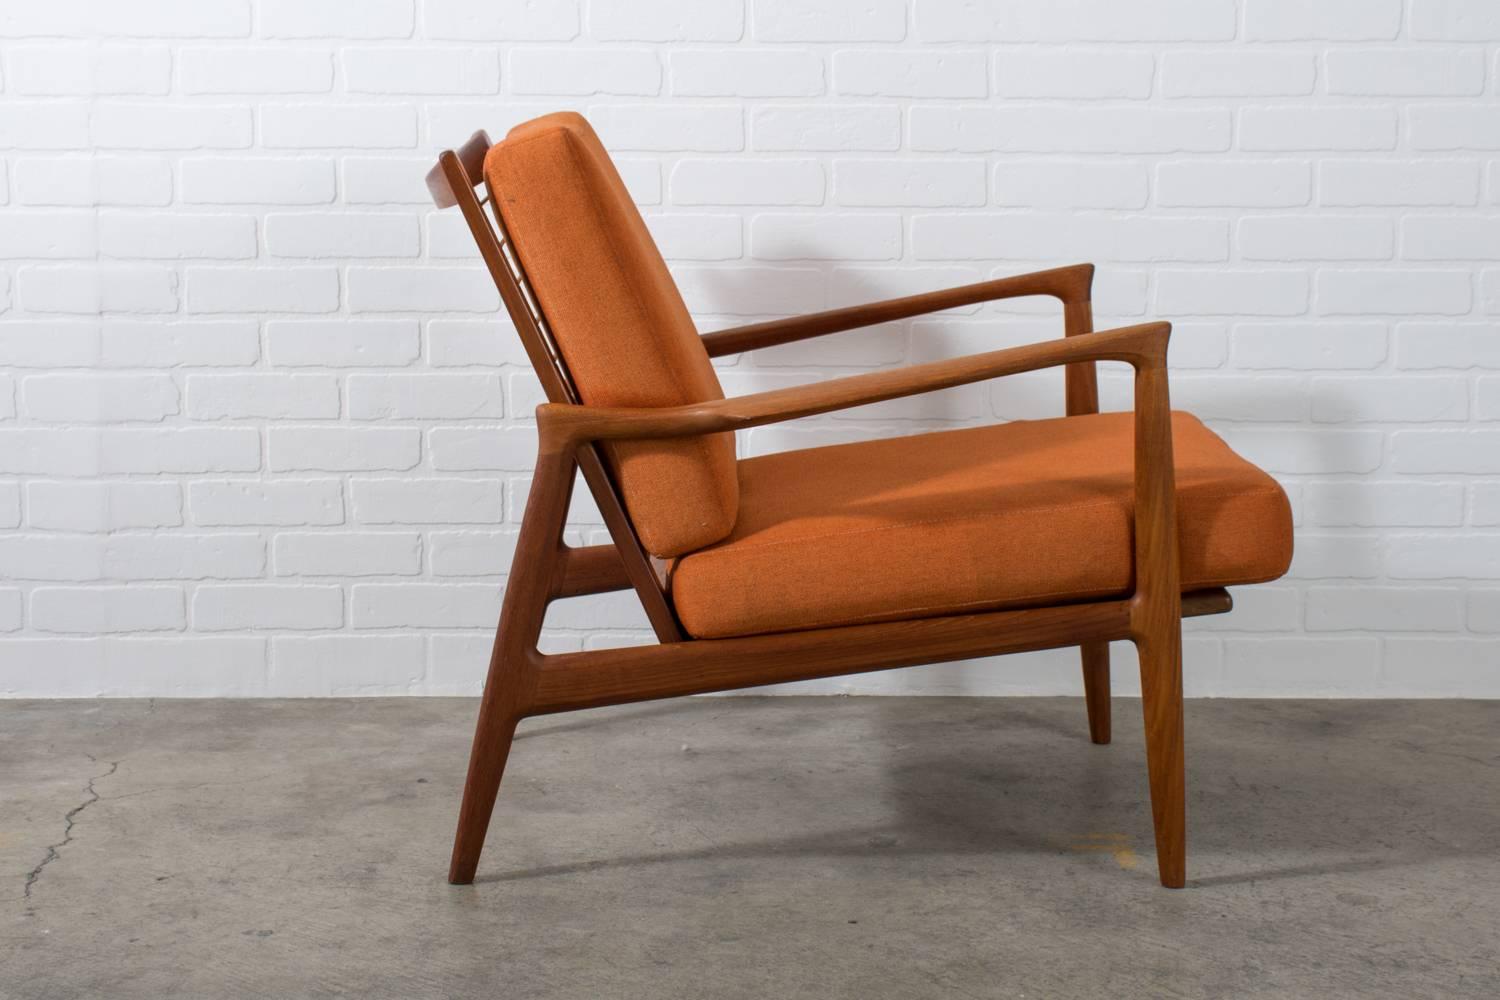 This Danish modern teak lounge chair by Ib Kofod-Larsen for Selig has beautiful curves. New straps. Original orange upholstery.